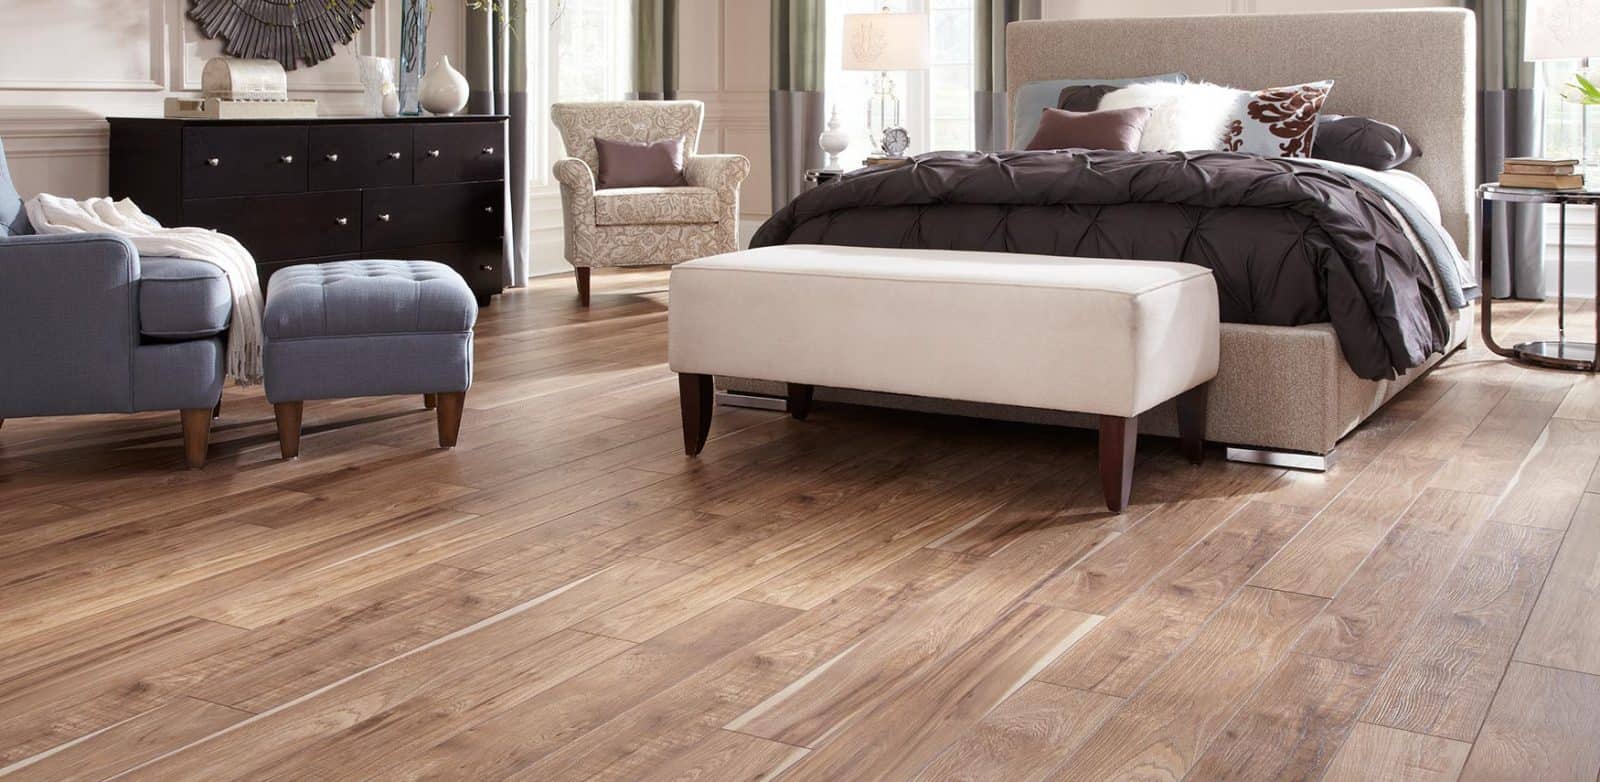 wood laminate bedroom floor